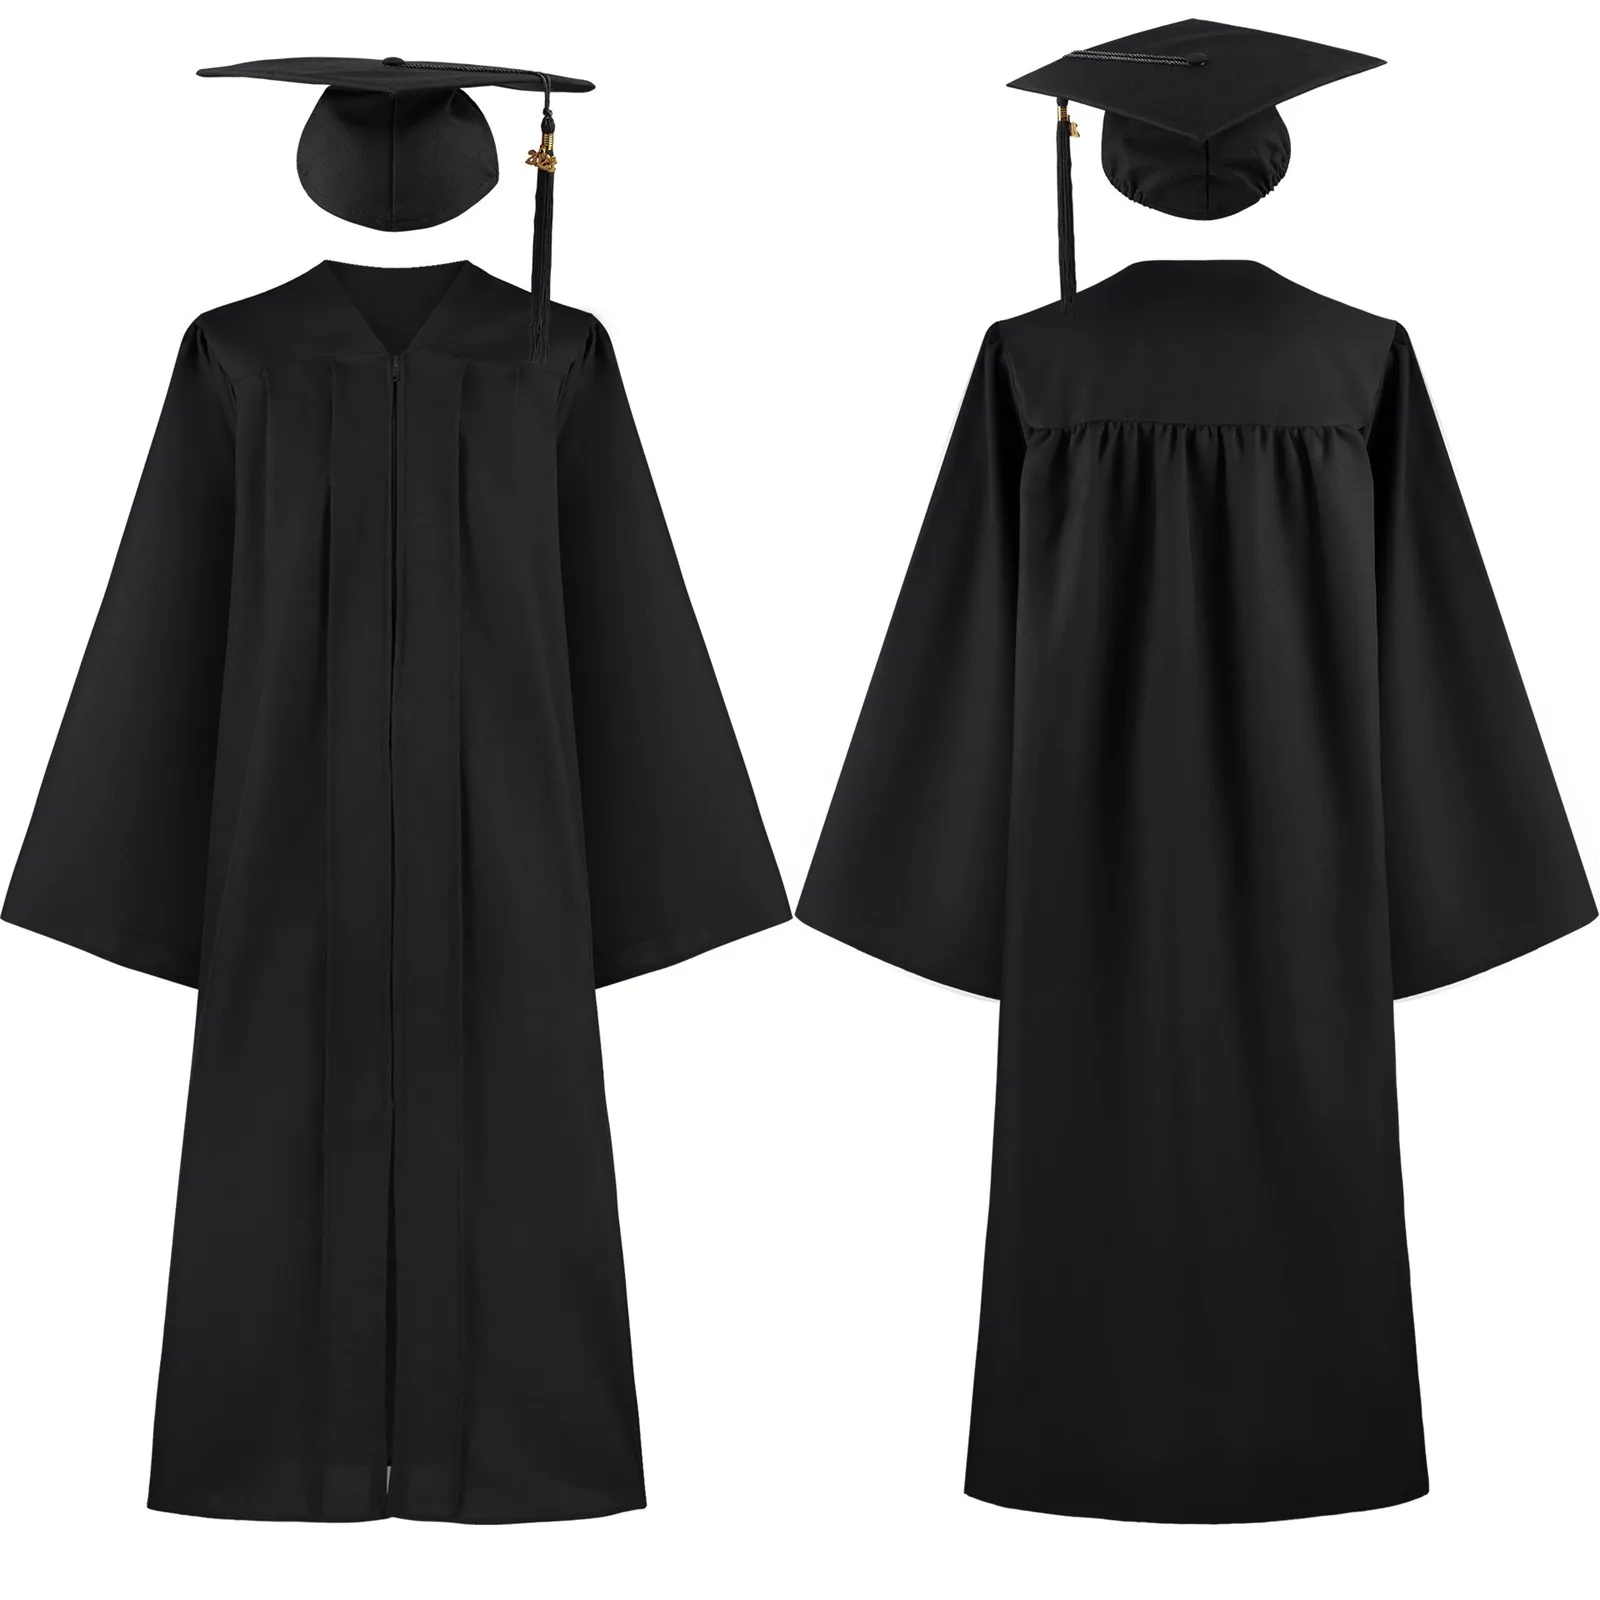 

2024 University Bachelor's Degree Robe Hat Sets College Graduation Degree Cos Dresses Men Women Students Graduation Costume